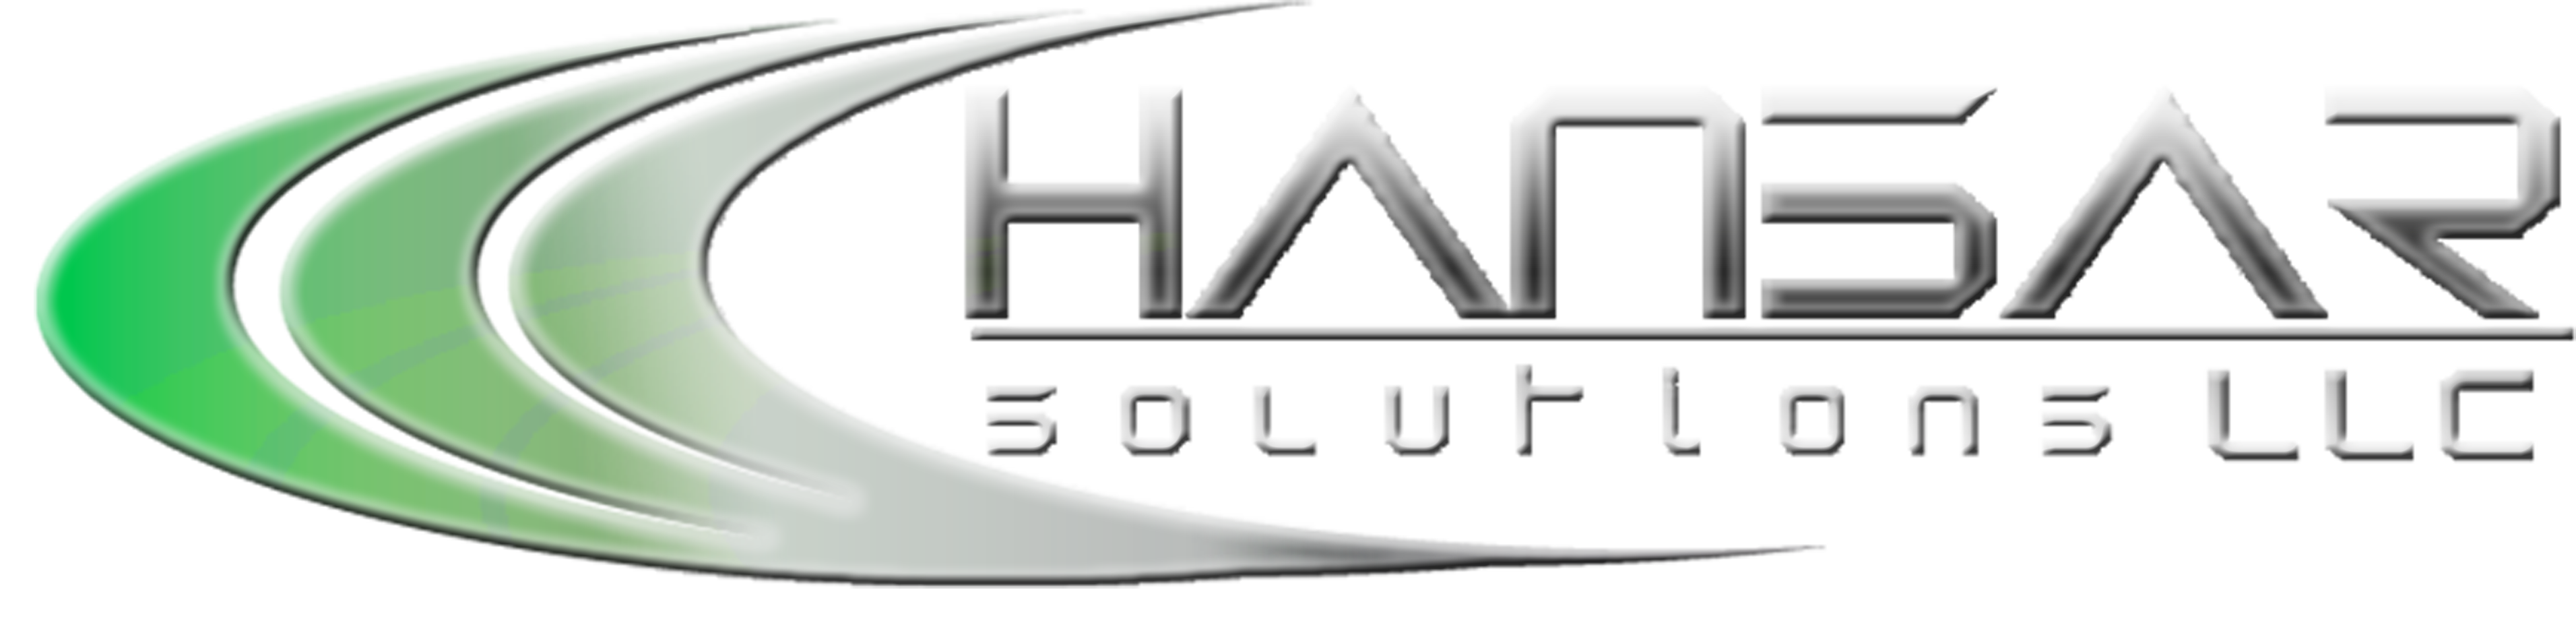 Hansar Consultoria en Sistemas, C.A - Hansar Solutions - Clientes - Customers